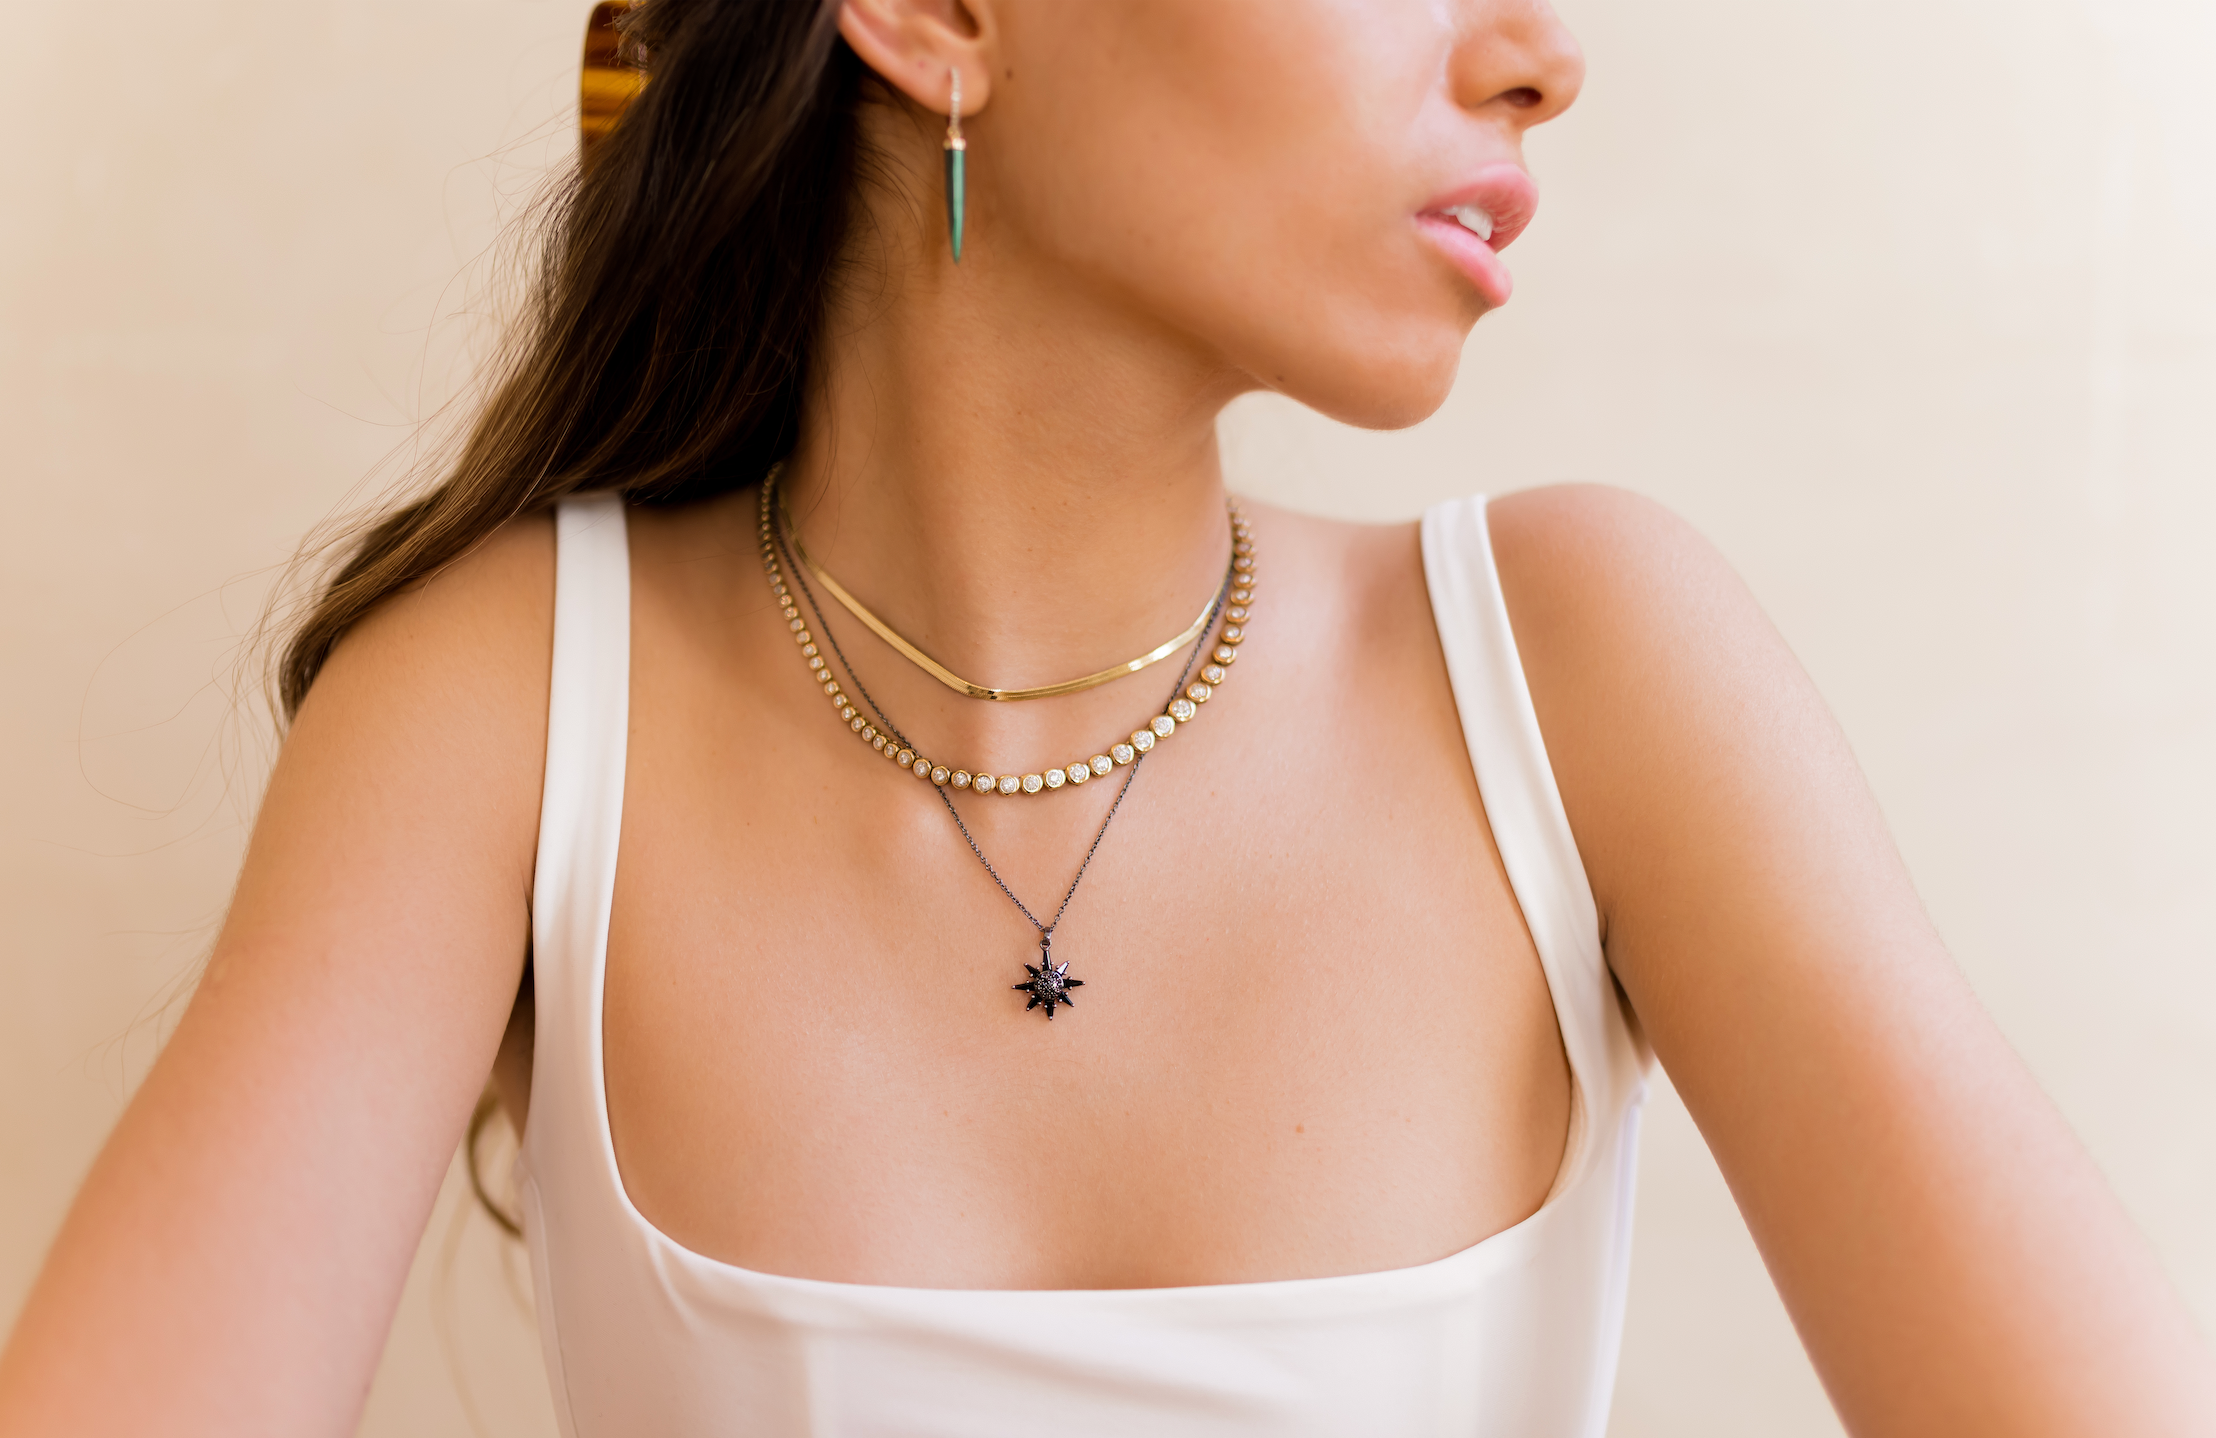 Armor Necklace Necklaces - BONDEYE JEWELRY ®